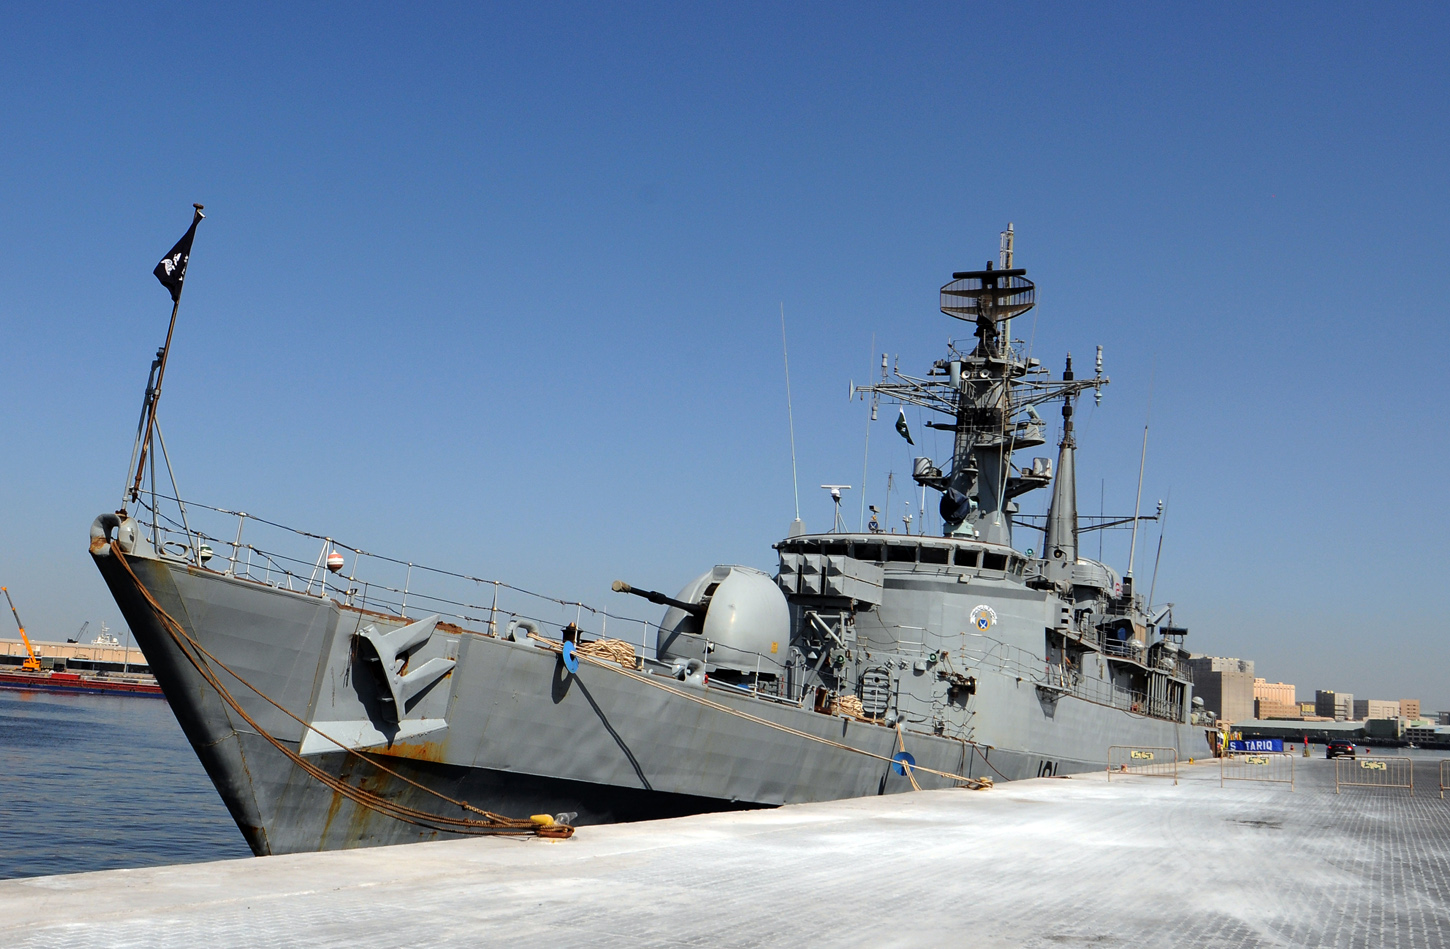 Pakistan Navy frigate docks in Kuwait with aim of strengthening ties